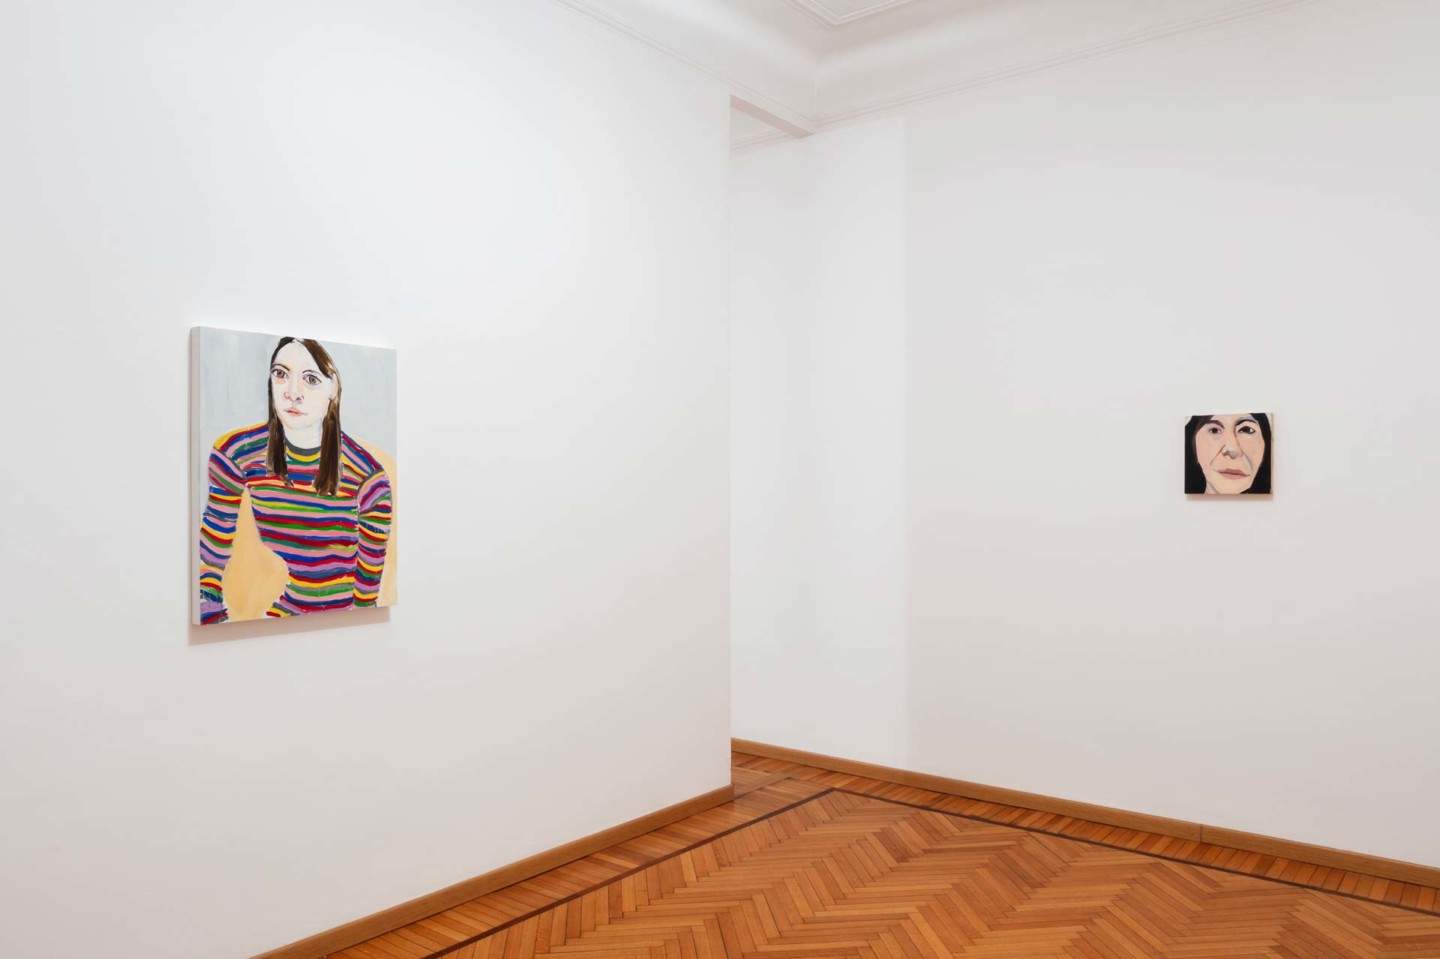 Milan, de Cardenas Gallery hosts an exhibition by Chantal Joffe dedicated to women writers